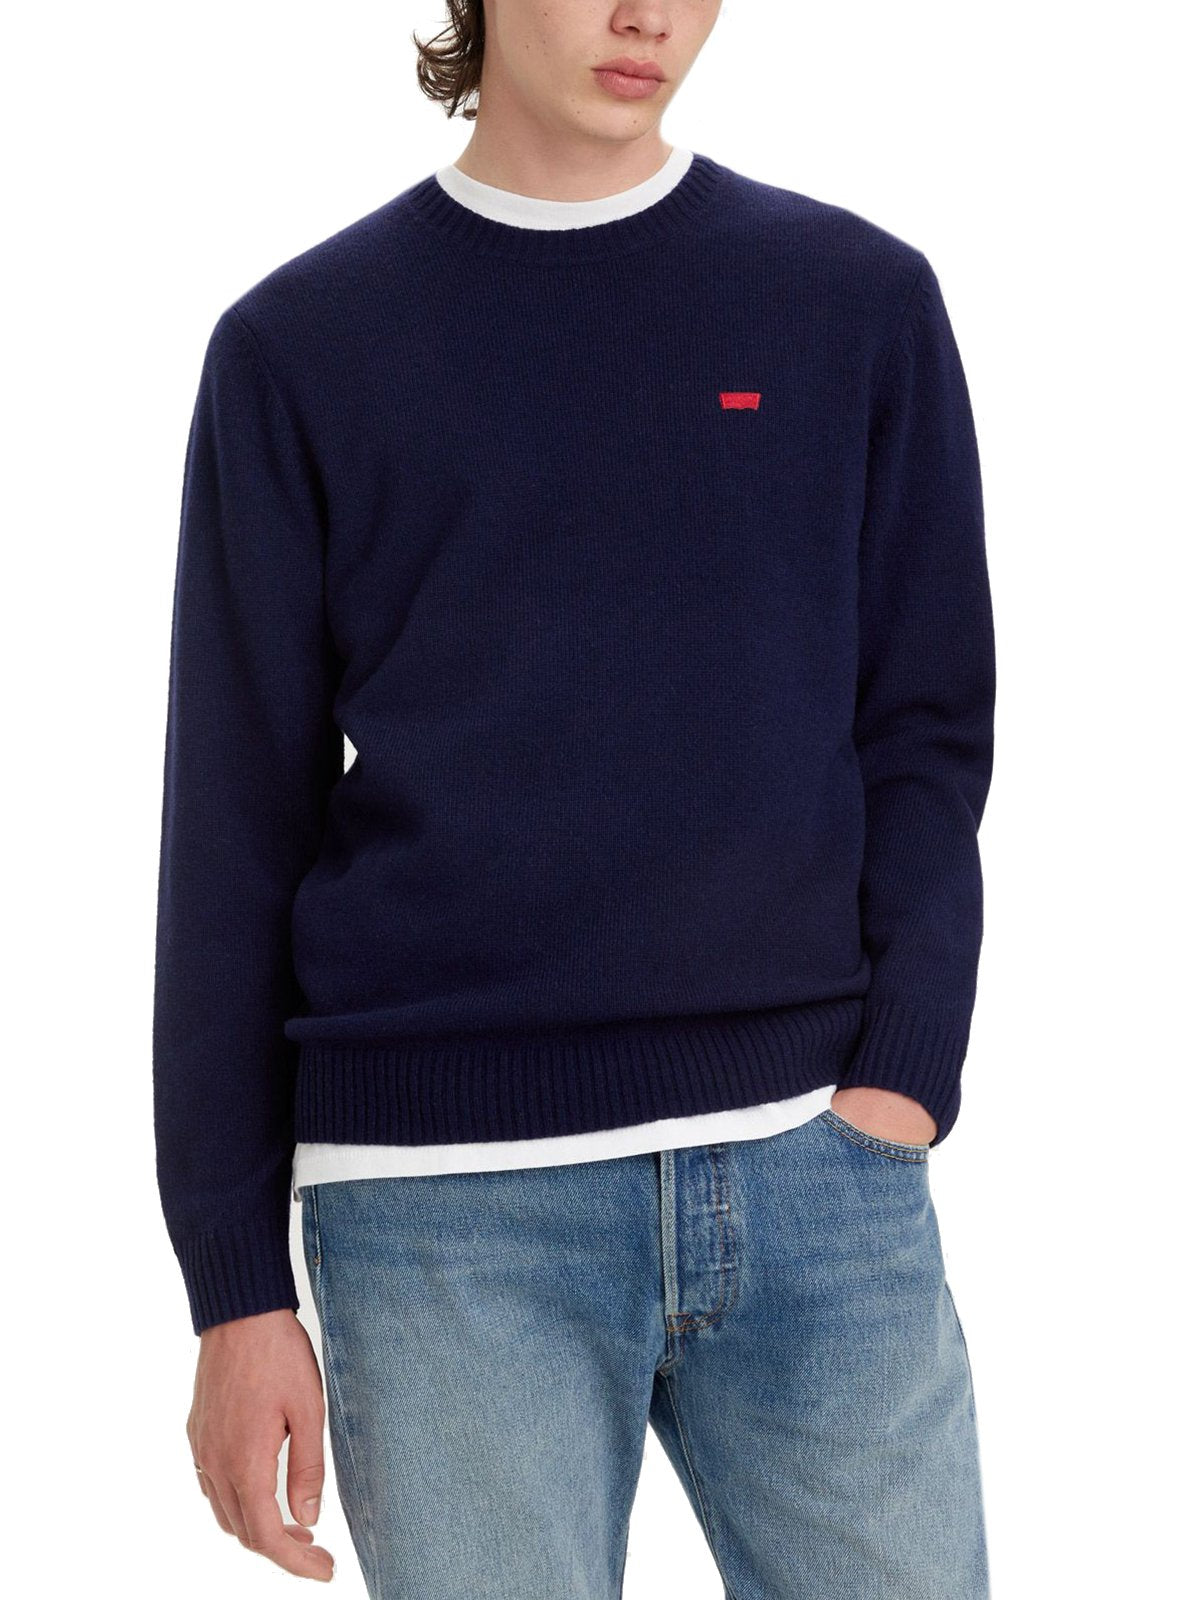 Maglioni Uomo Levi's - Original Hm Sweater - Blu